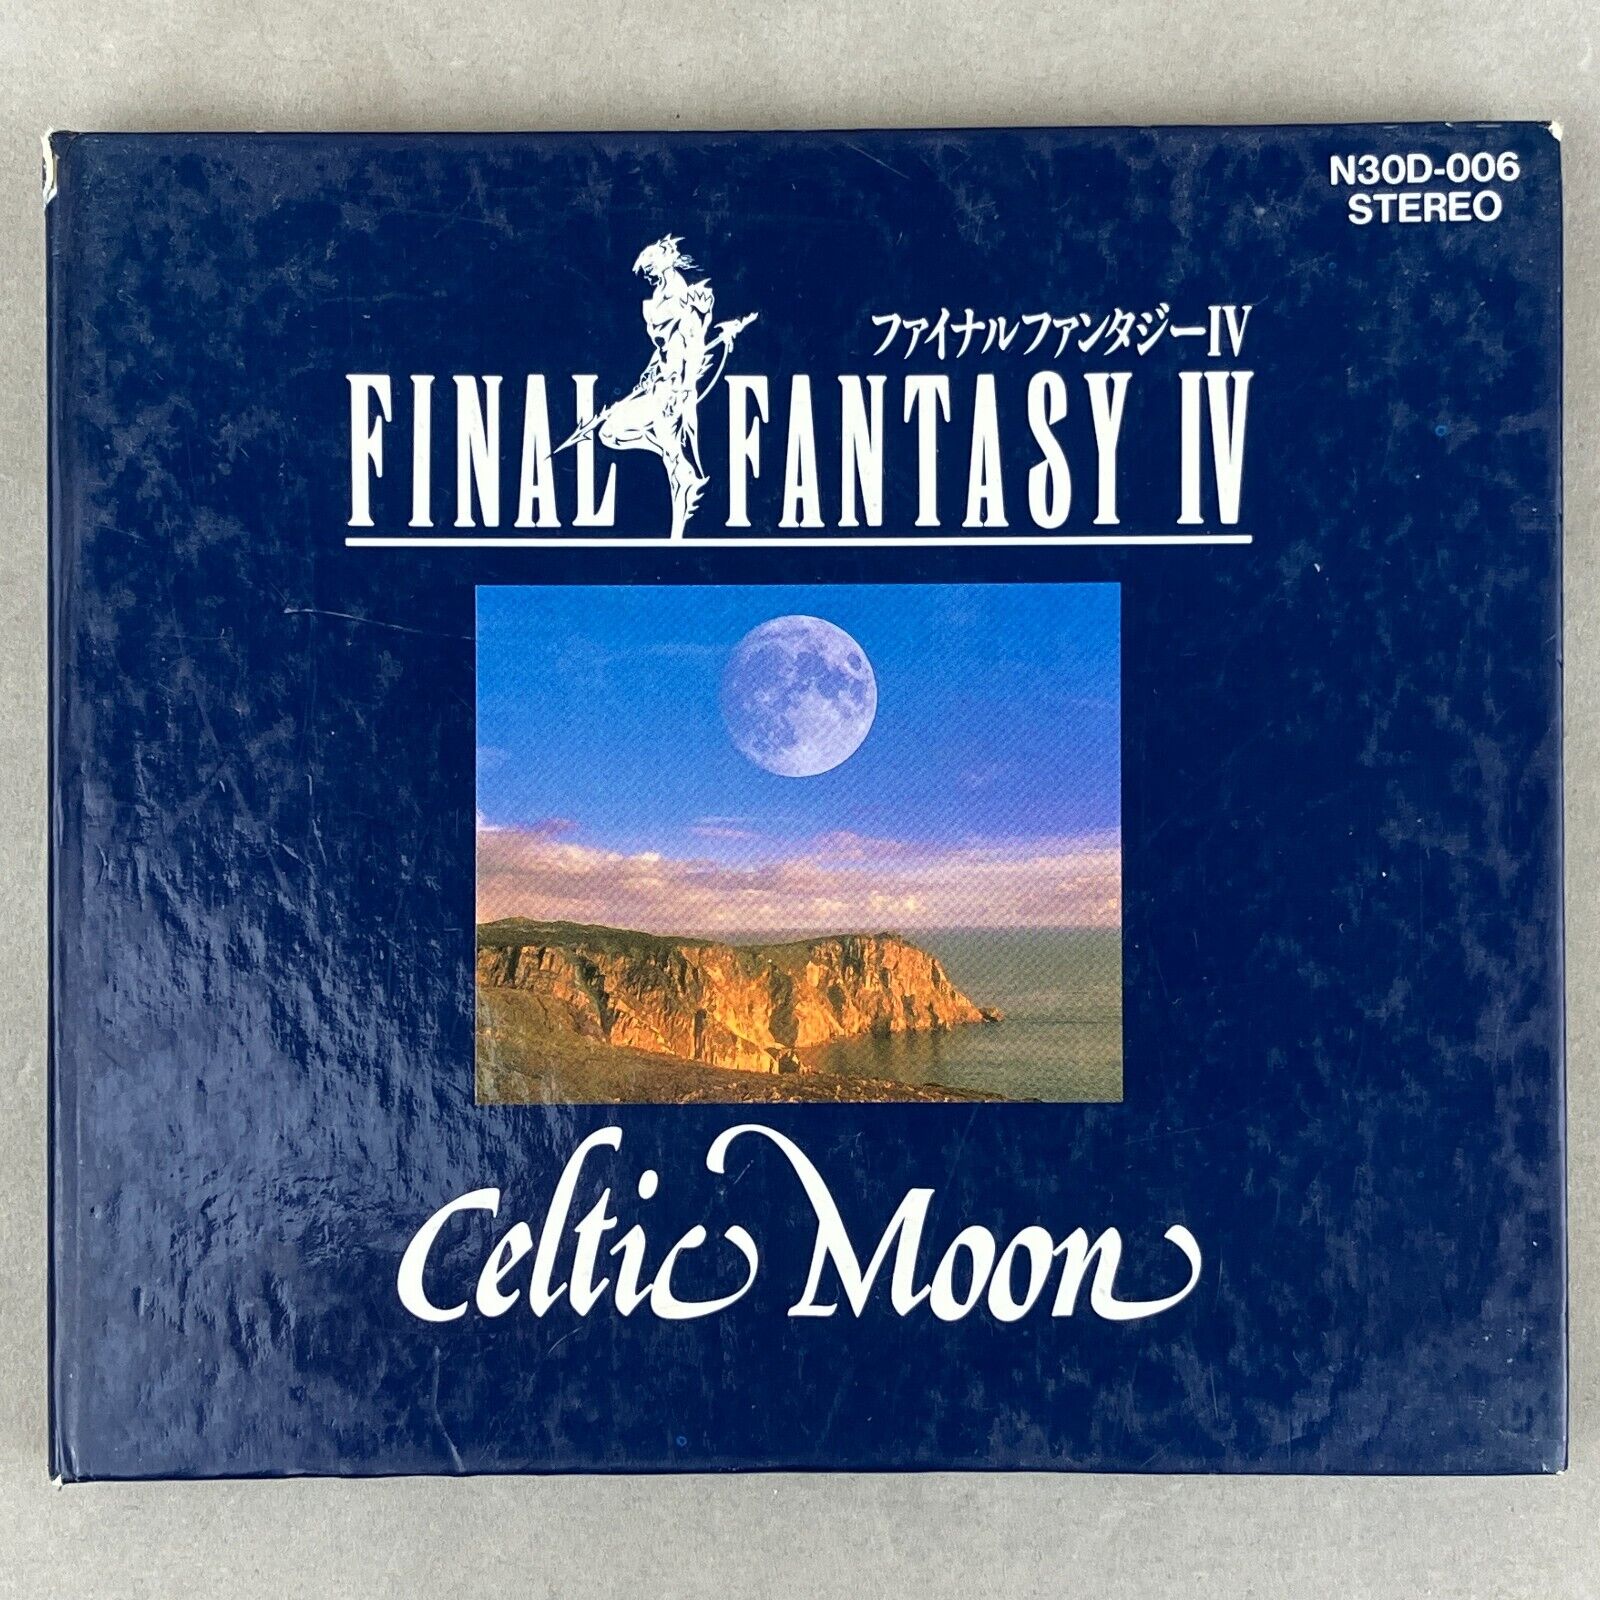 Square Enix Final Fantasy IV Celtic Moon Hardcover Original Soundtrack OST CD